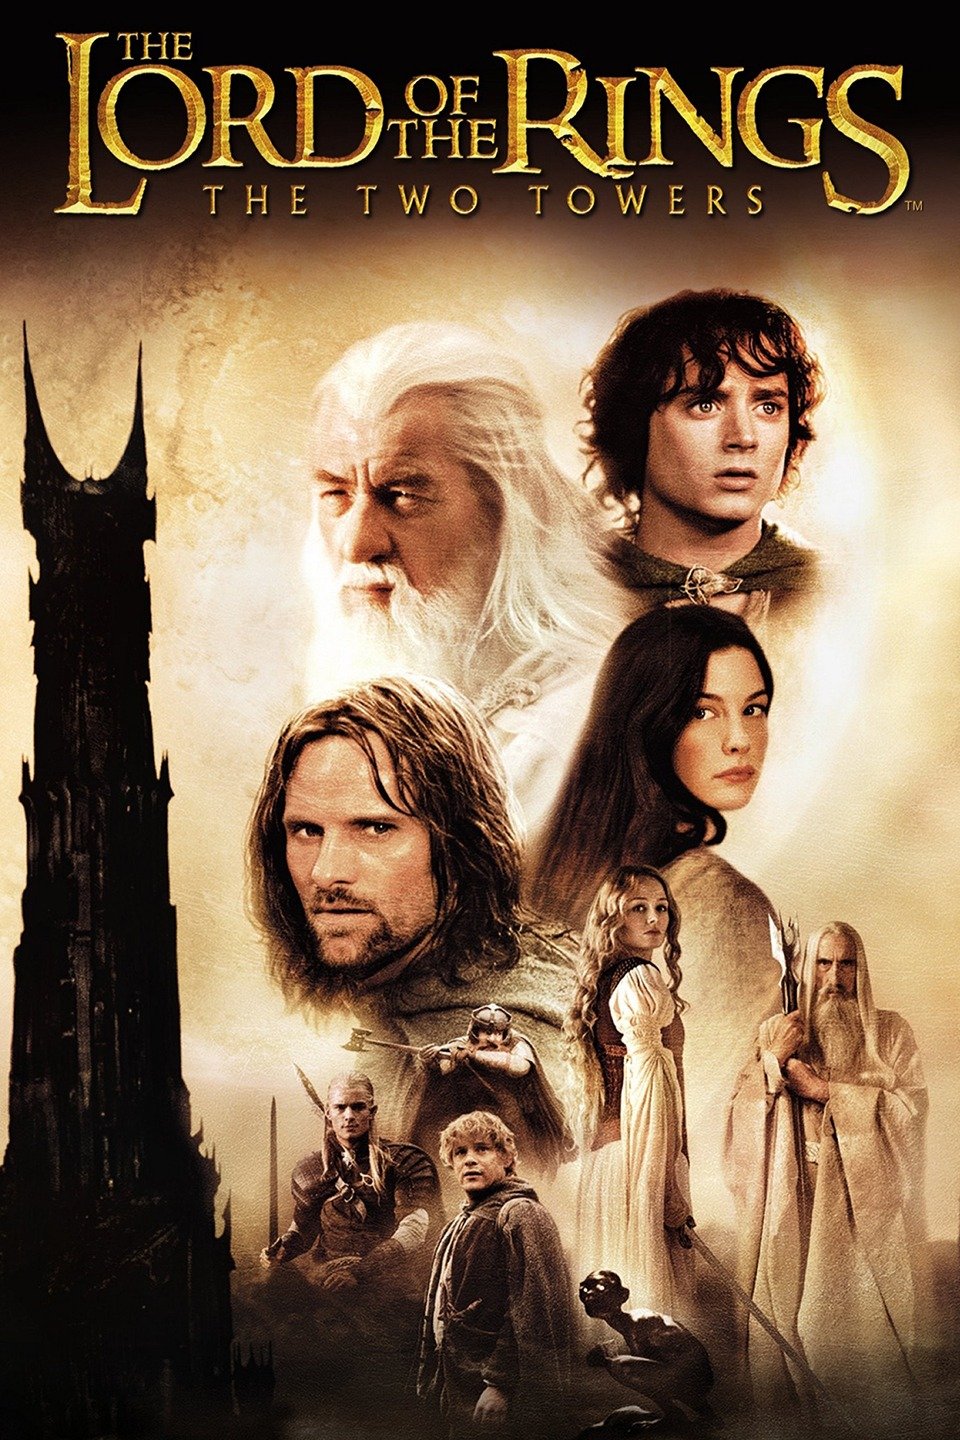 [MINI Super-HQ] The Lord of the Rings: The Two Towers (2002) ศึกหอคอยคู่กู้พิภพ [1080p] [พากย์ไทย 5.1 + อังกฤษ DTS] [BluRay.DTS.x264] [บรรยายไทย + อังกฤษ] [เสียงไทย + ซับไทย] [ONE2UP]